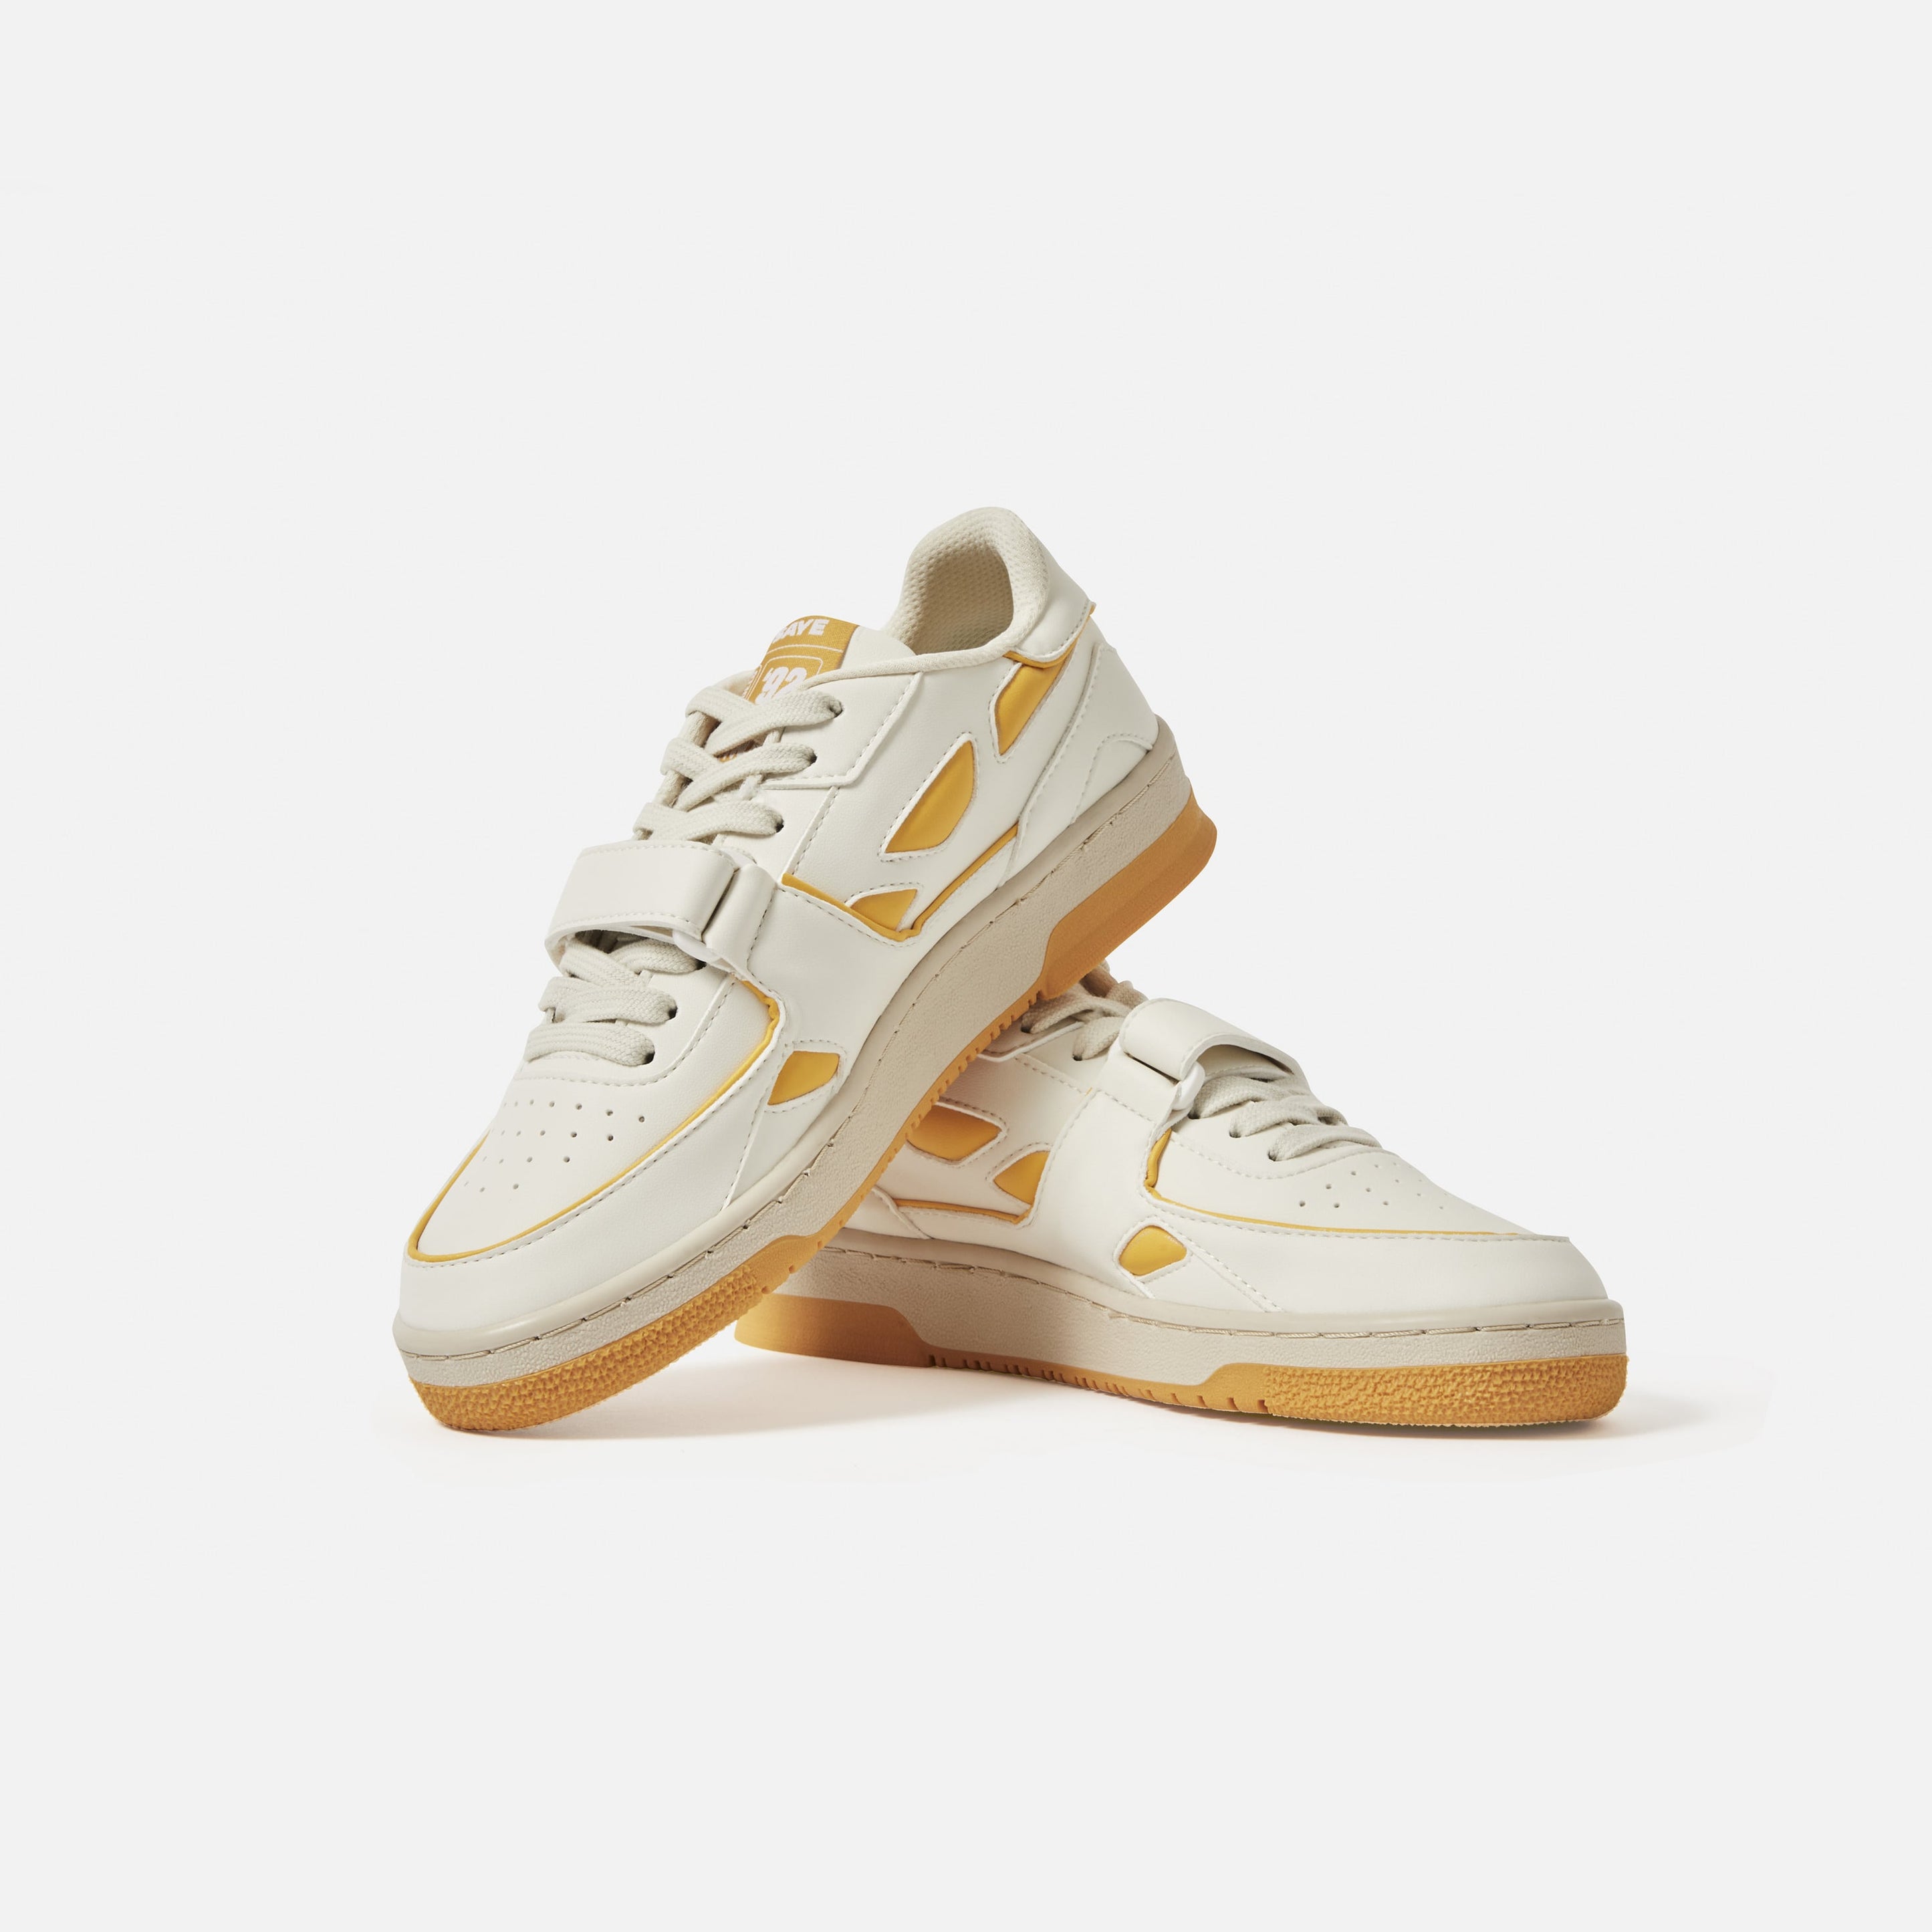 Modelo '92 Yellow - Vegan Sneakers - SAYE